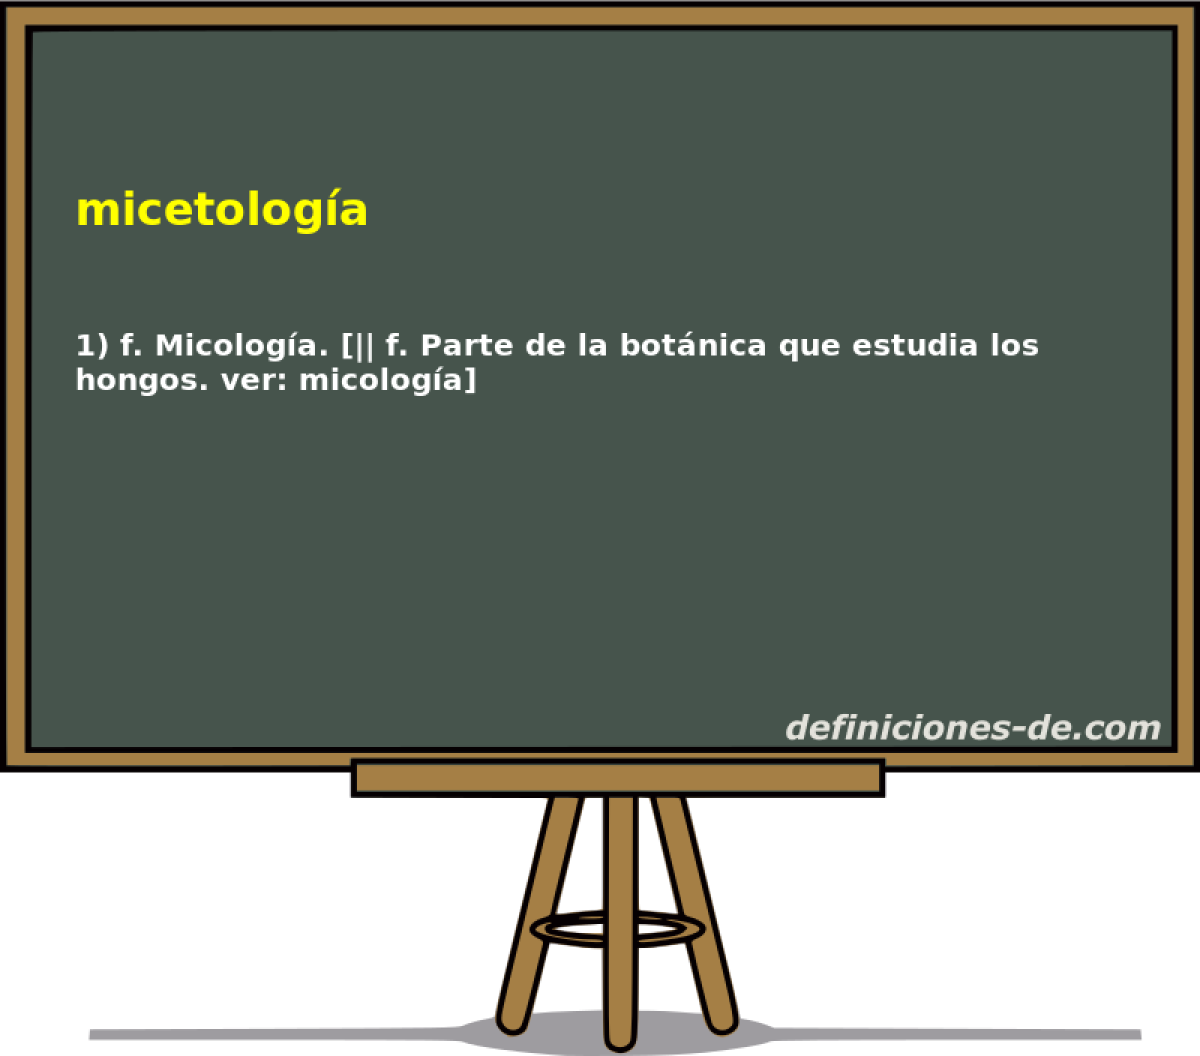 micetologa 